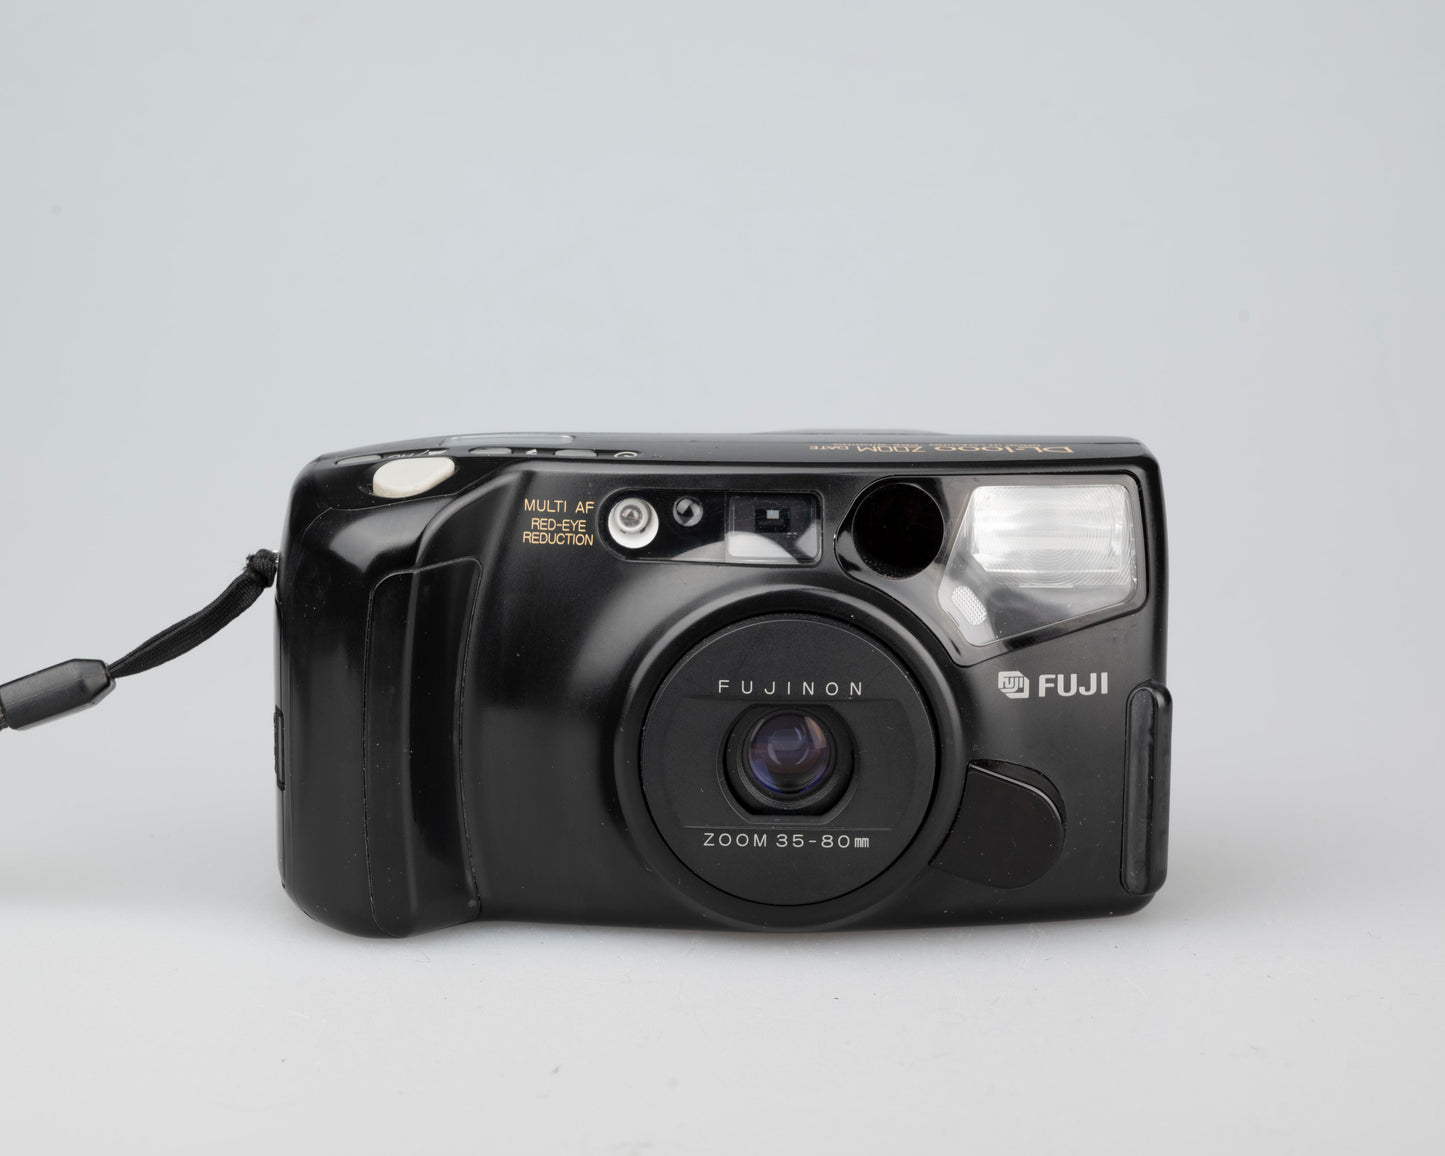 Fujifilm DL-1000 Zoom 35mm camera (serial 80113735)